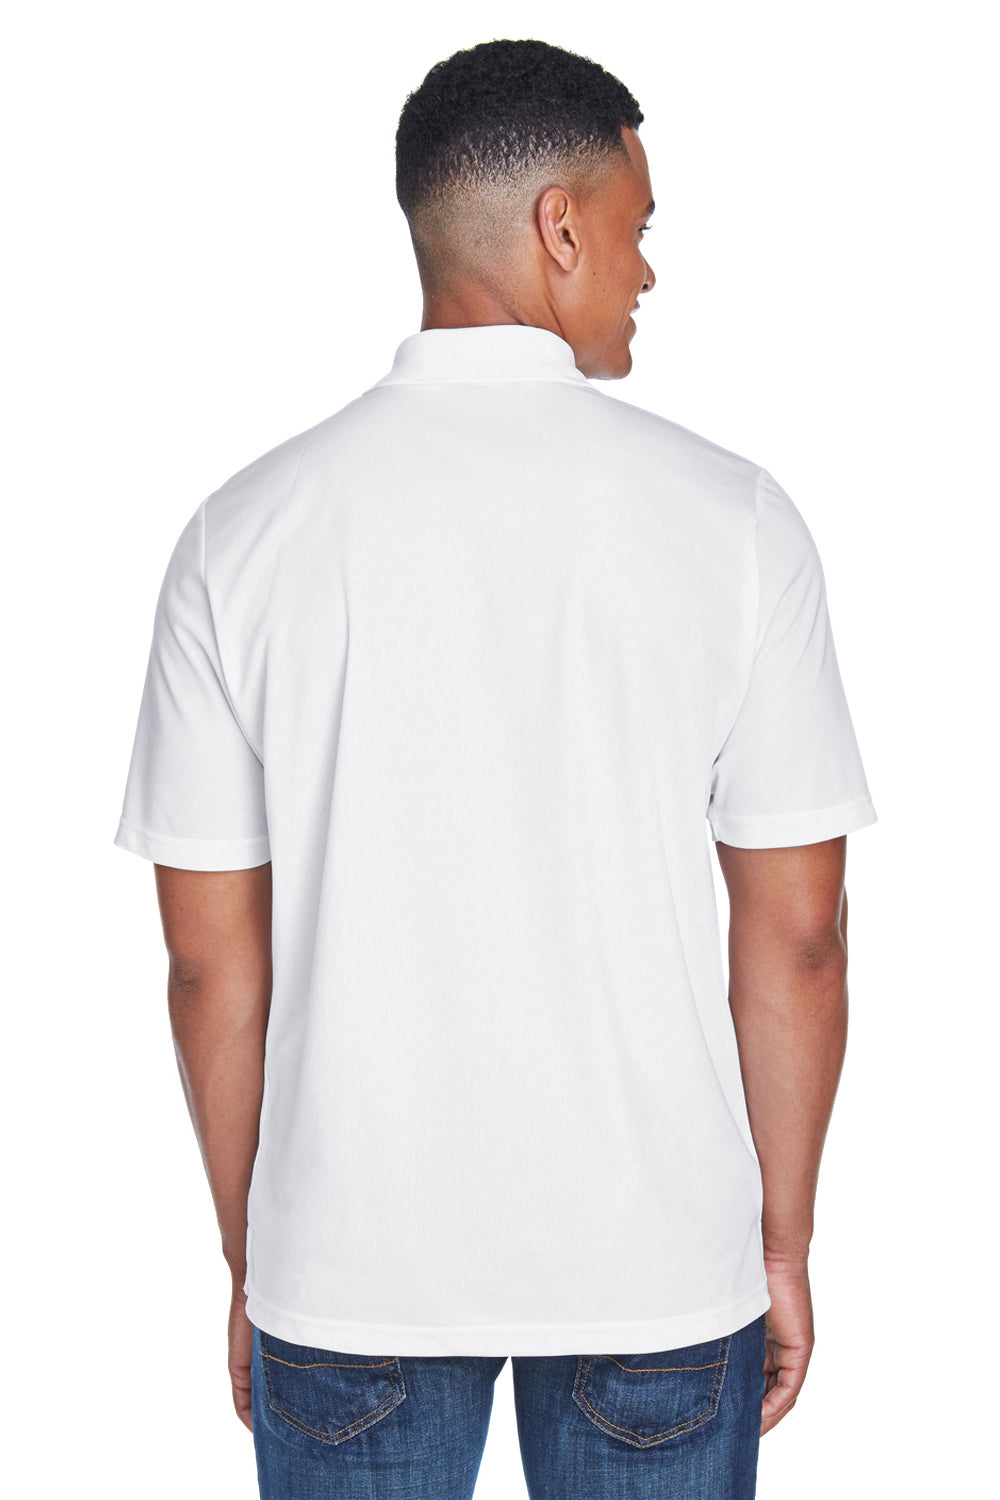 Core 365 88181P Mens Origin Performance Moisture Wicking Short Sleeve Polo Shirt w/ Pocket White Back